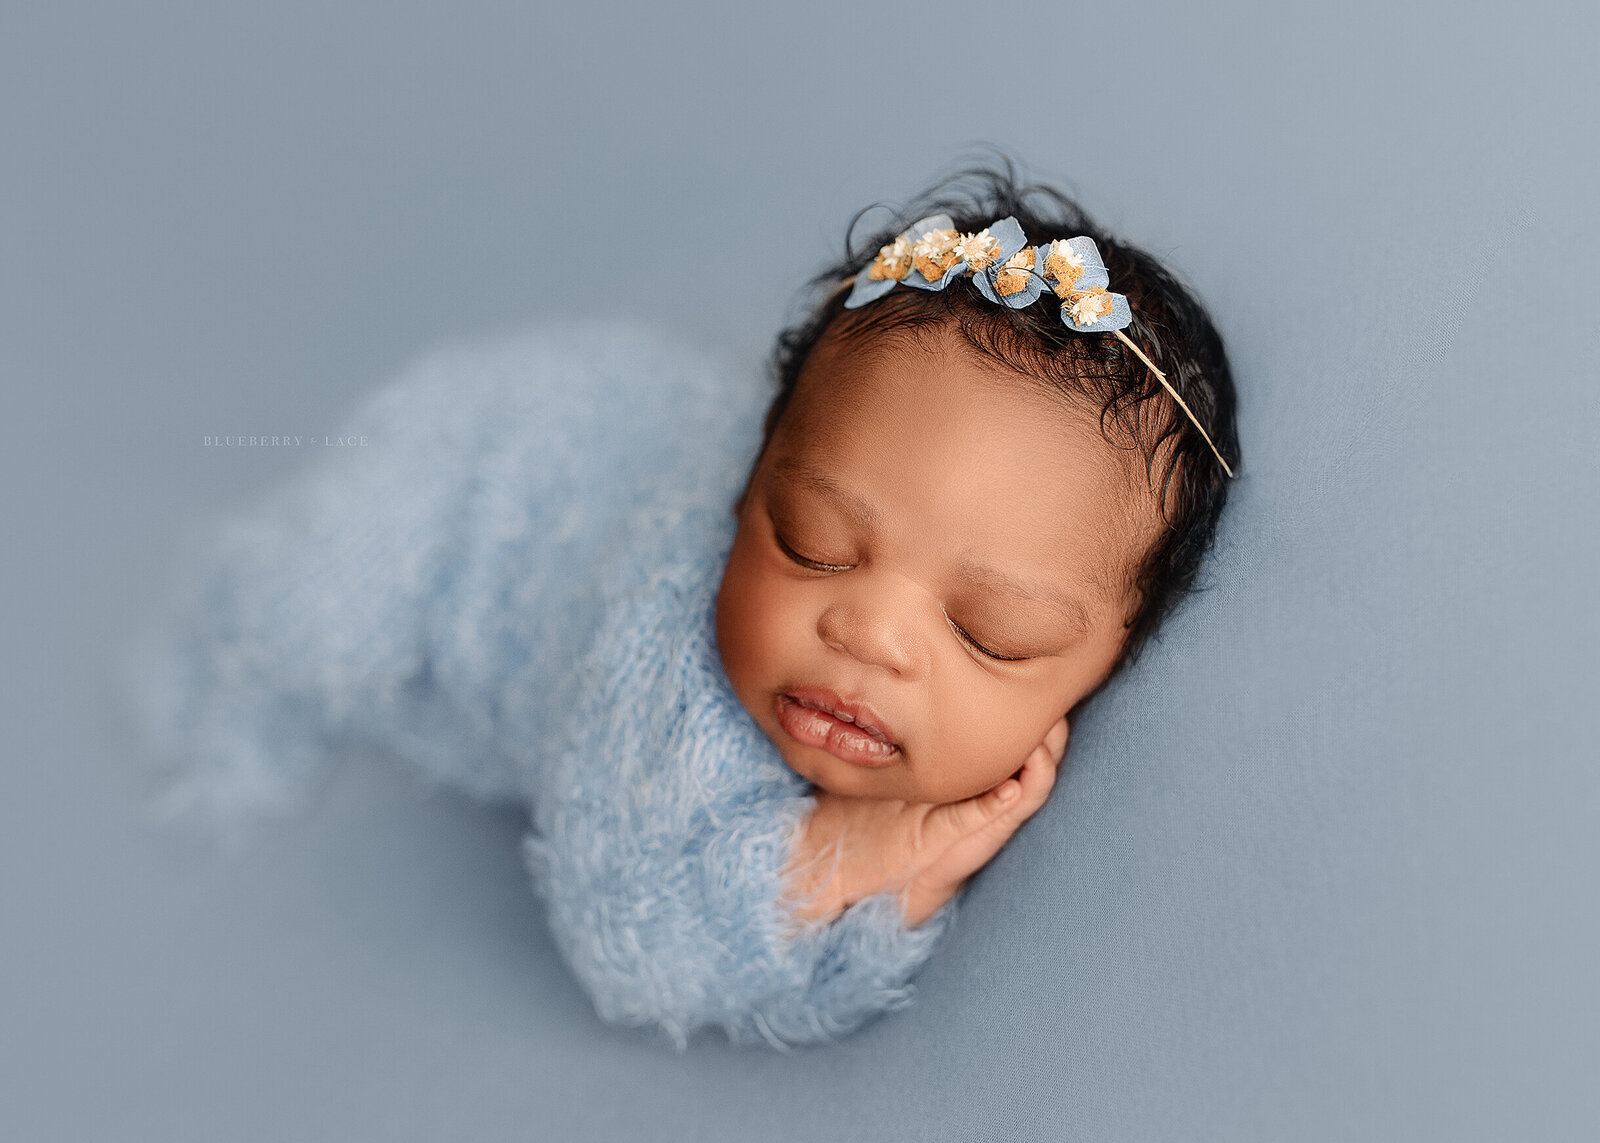 newborn photo shoot in oswego ny studio wearing baby blue and posed sleeping